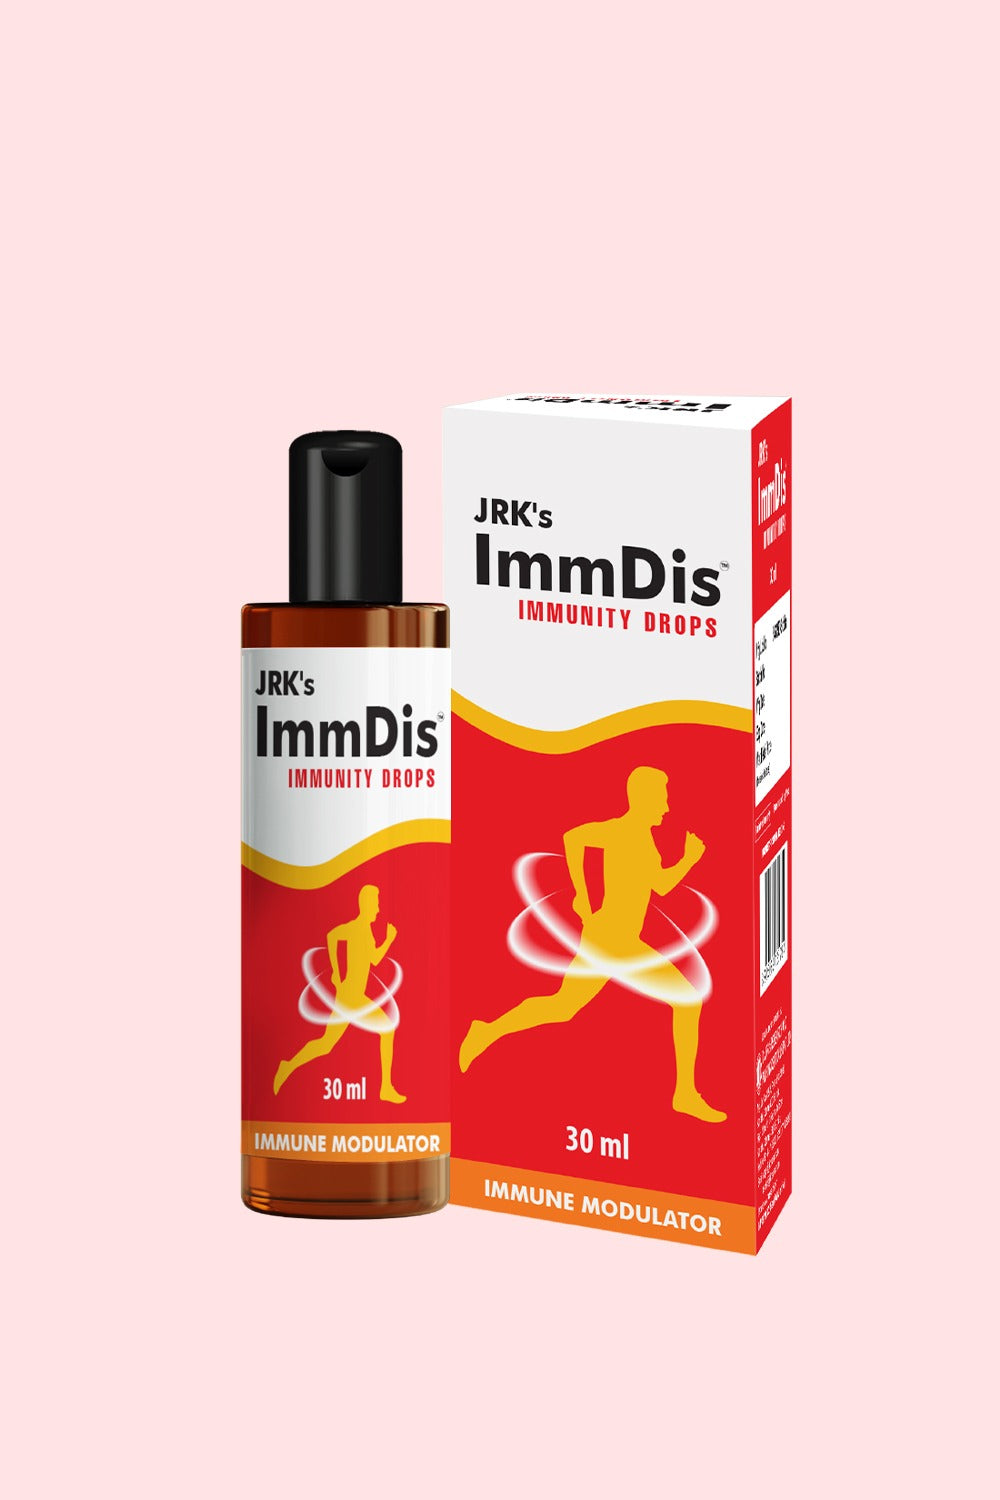 JRK's Immdis Immunity Drops